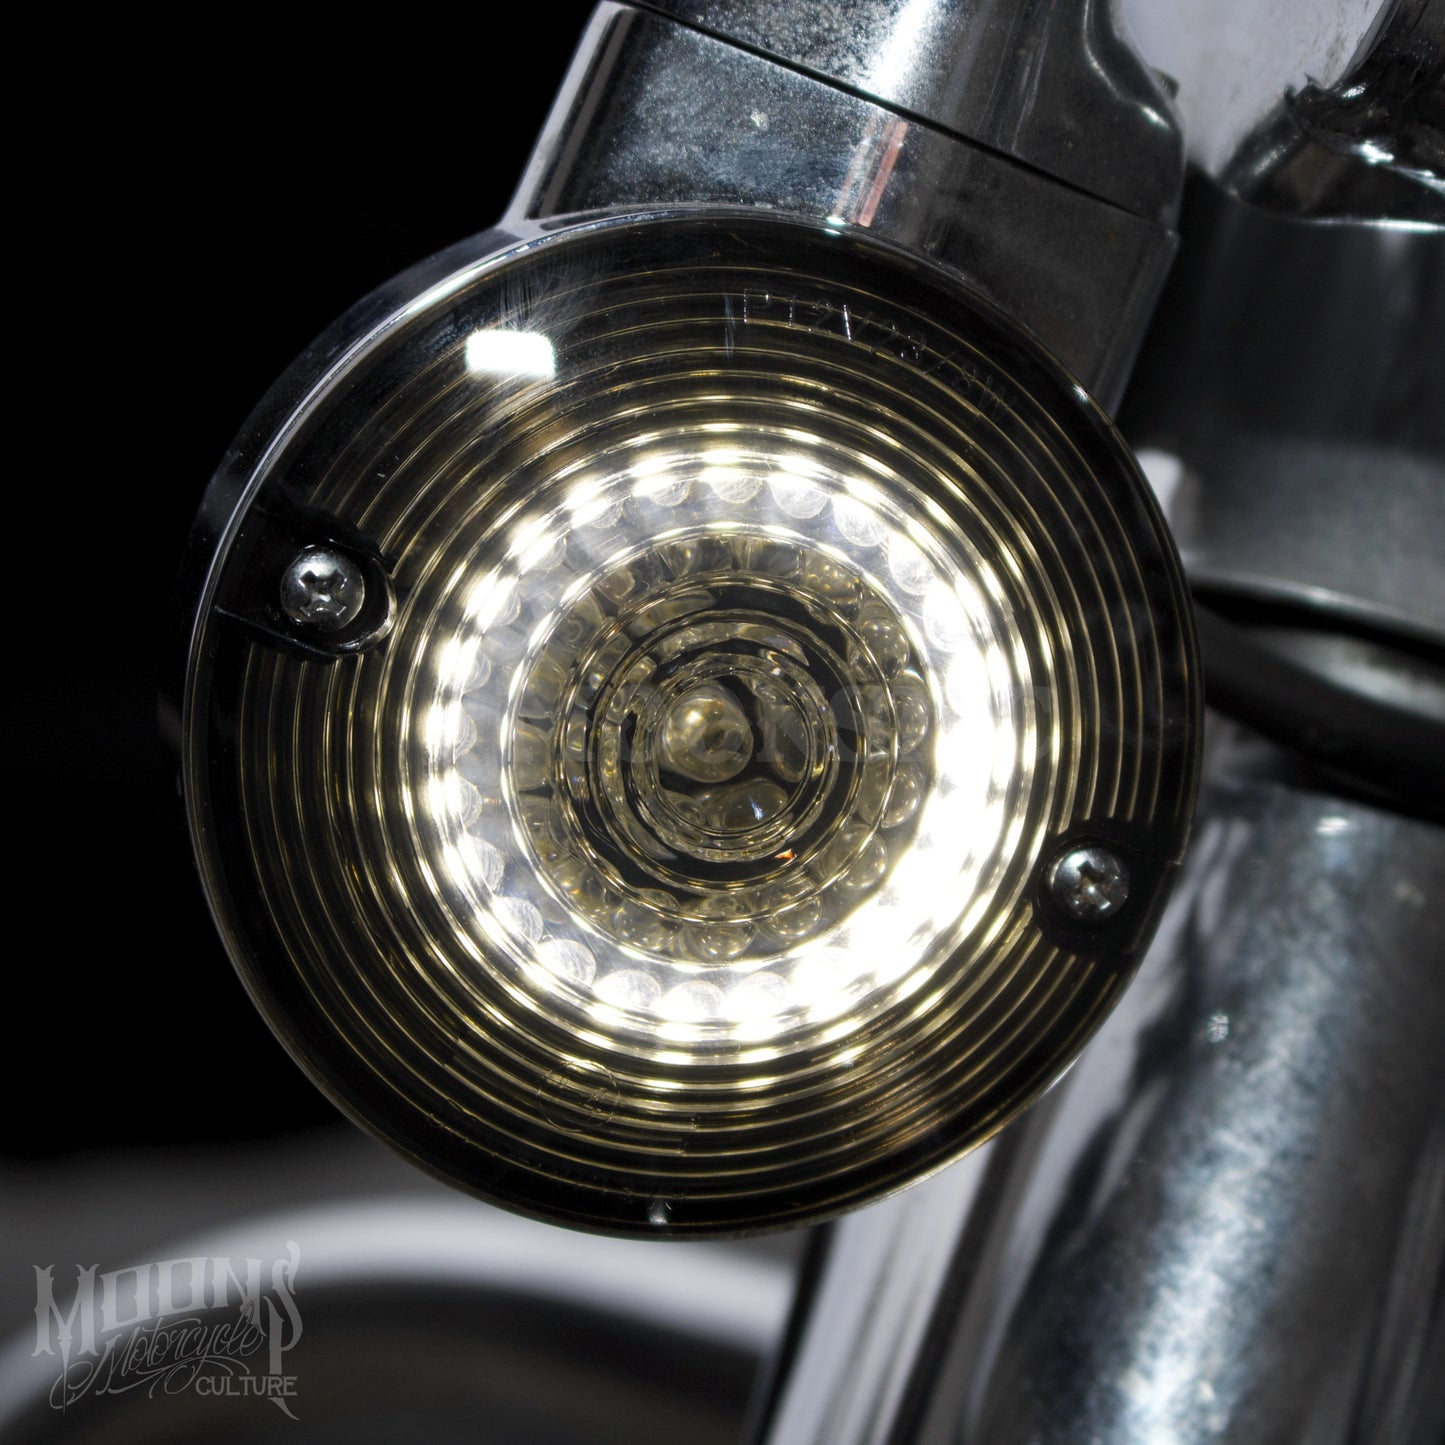 MOONSMC® MOONPODS Flat Style LED Turn Signals, Lighting, MOONS, MOONSMC® // Moons Motorcycle Culture